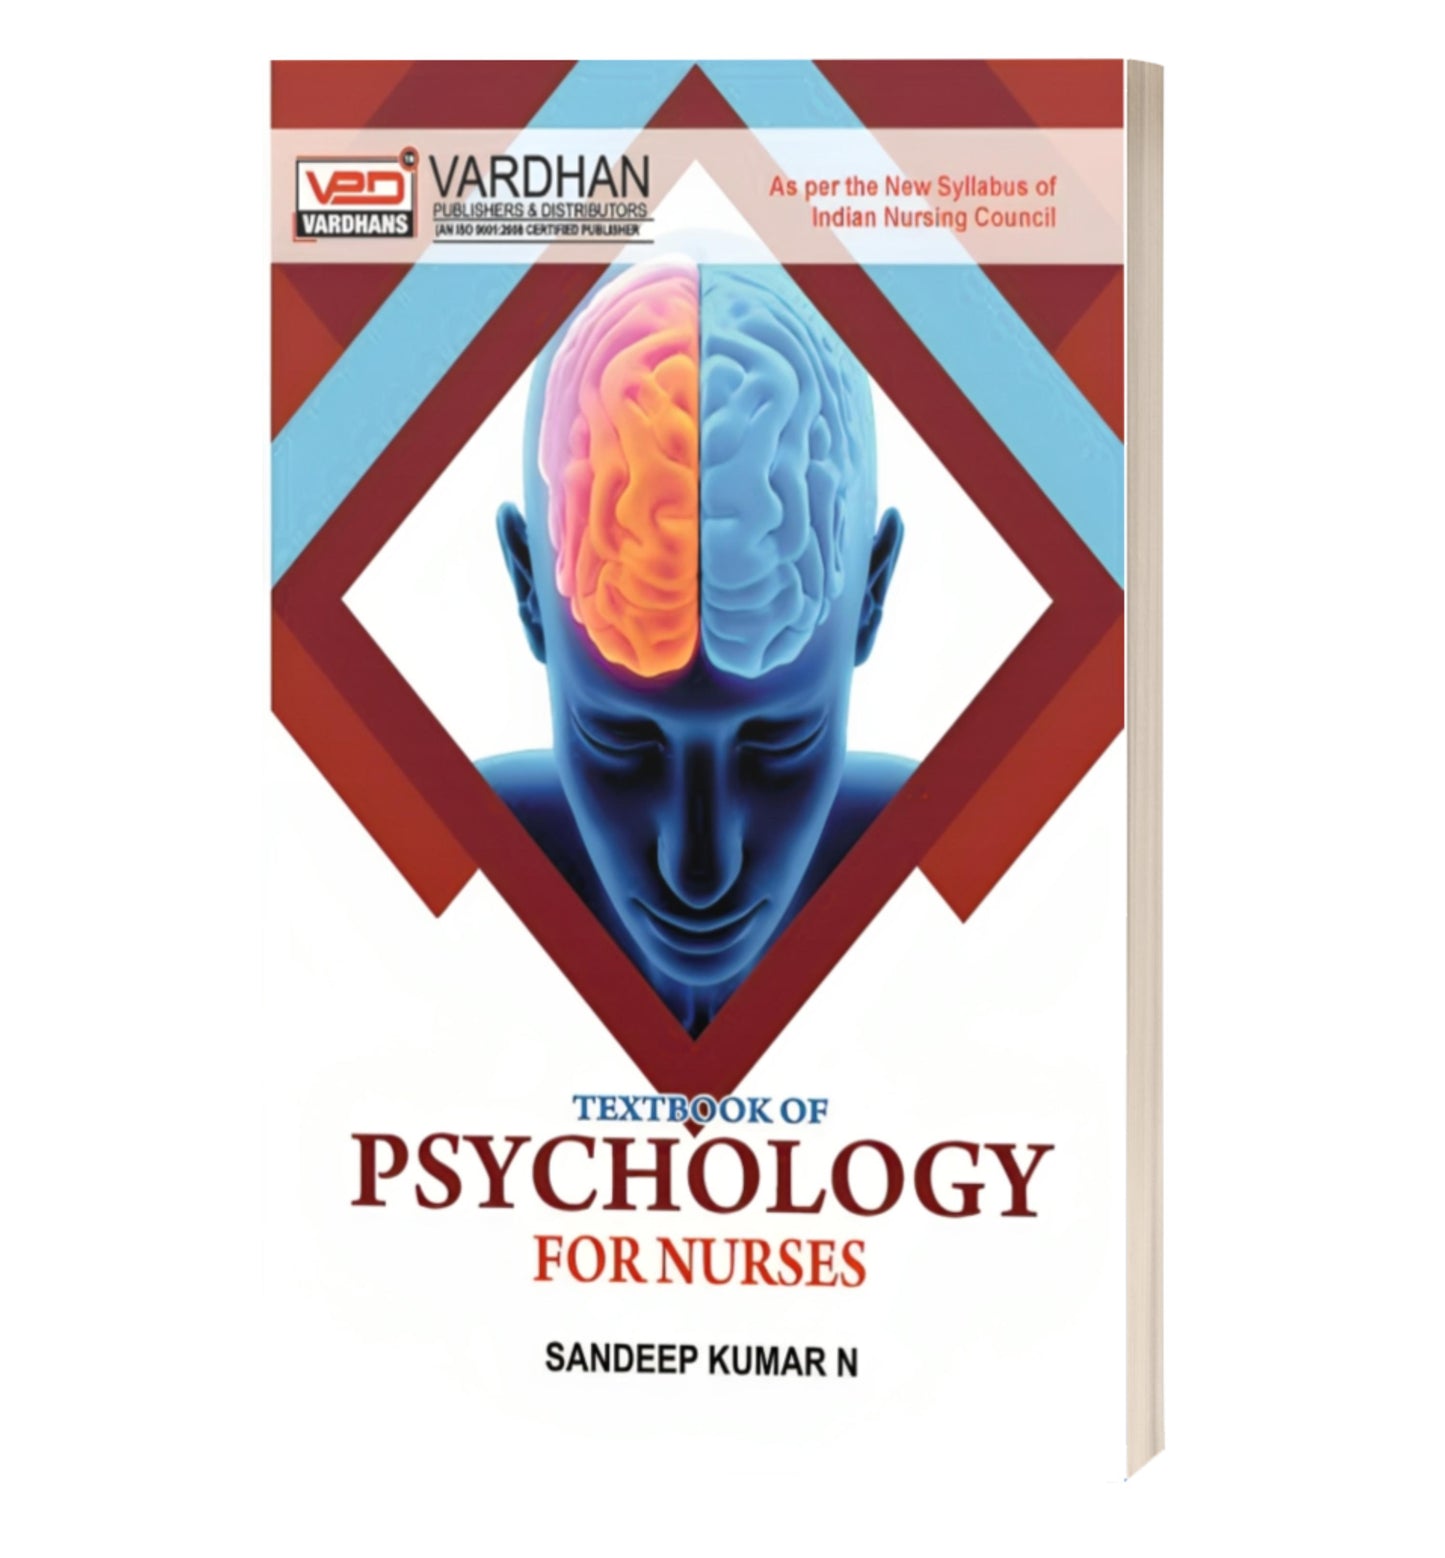 Textbook of Psychology for Nurses